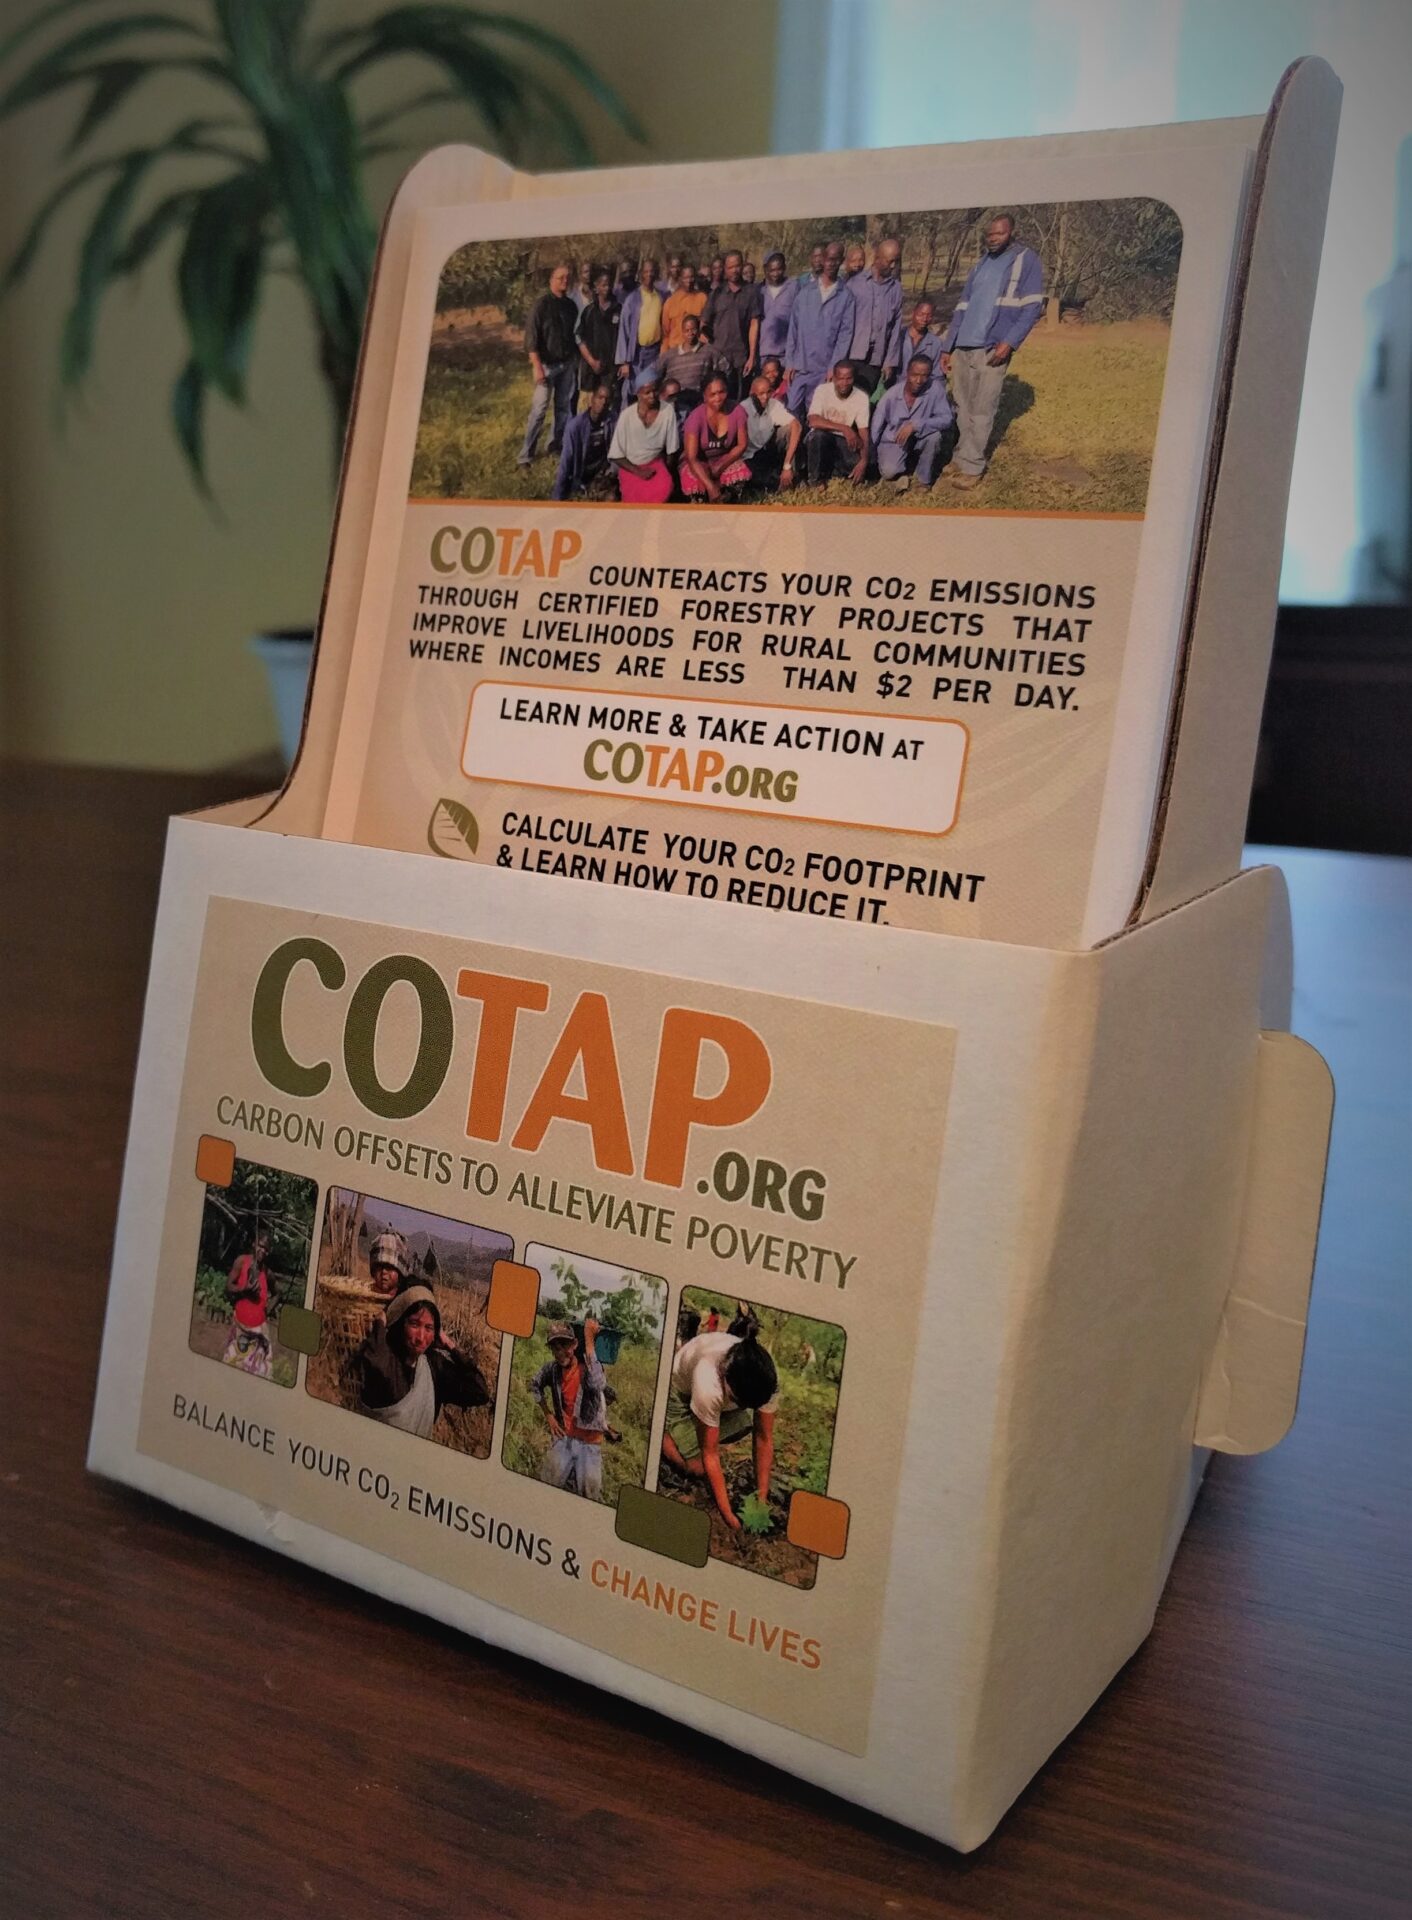 The COTAP Marketing Display